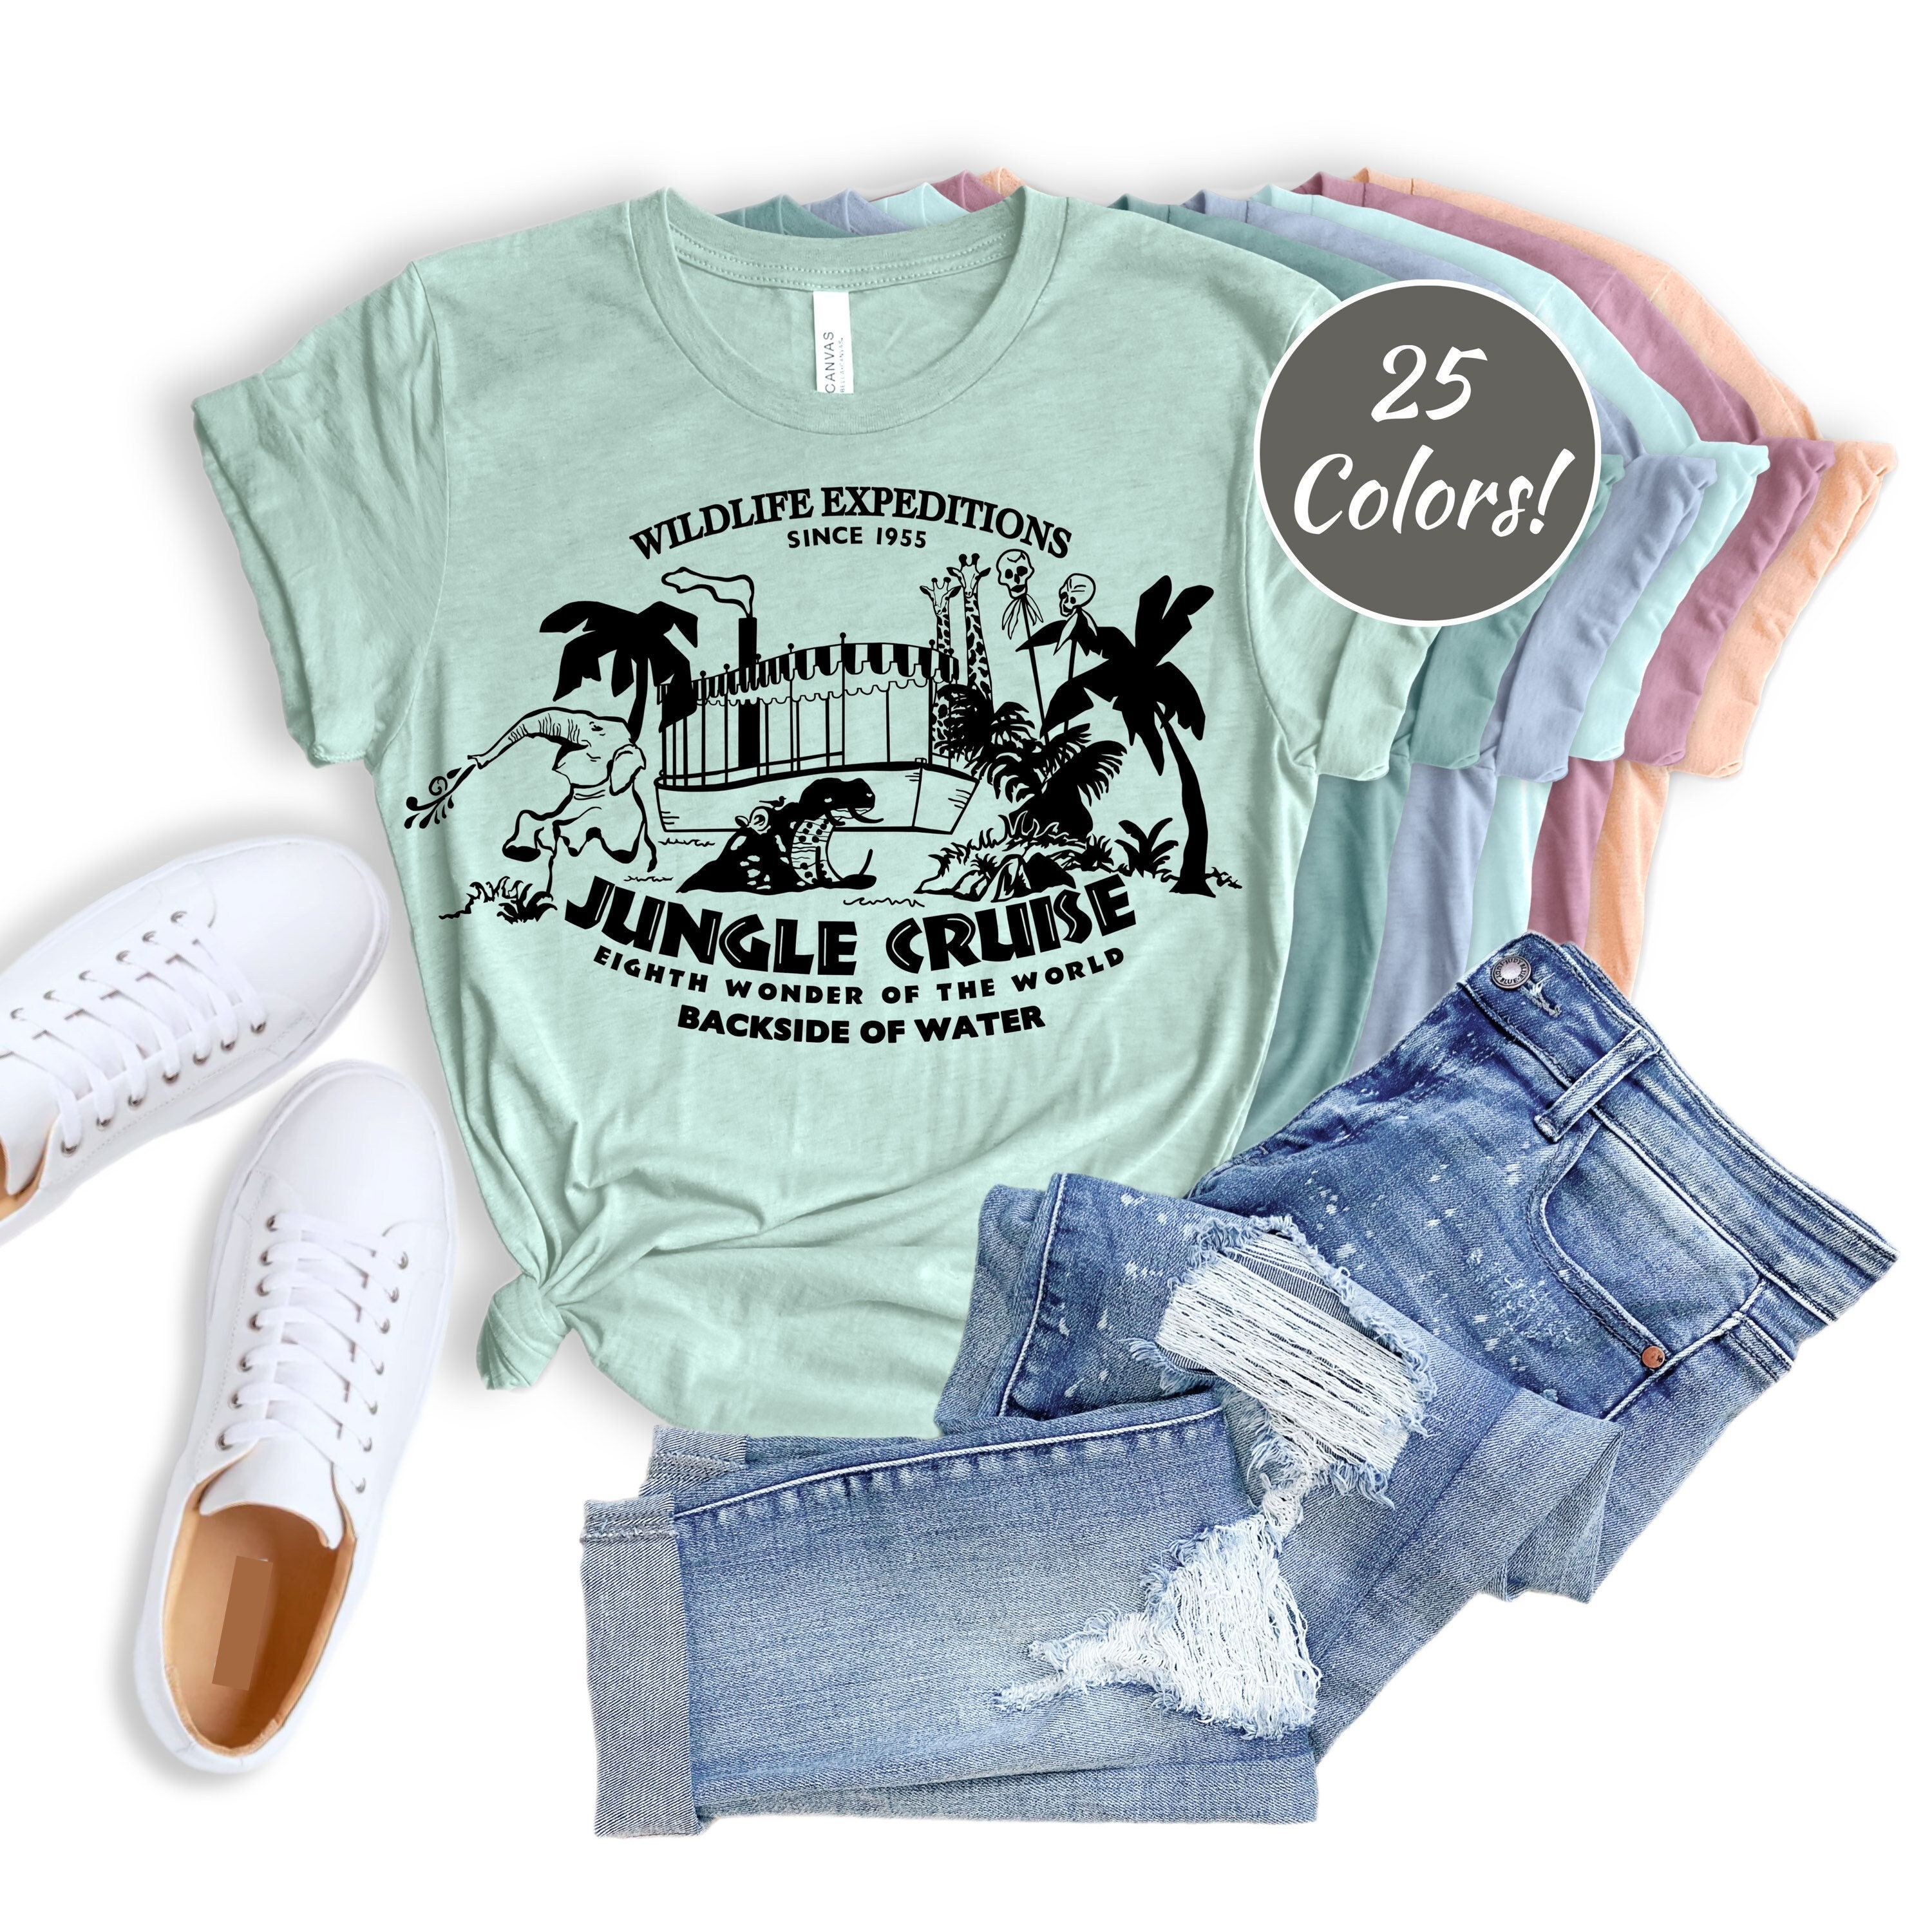 Disney's jungle cruise shirt / adventureland shirt / the backside of water / jungle cruise ride shirt